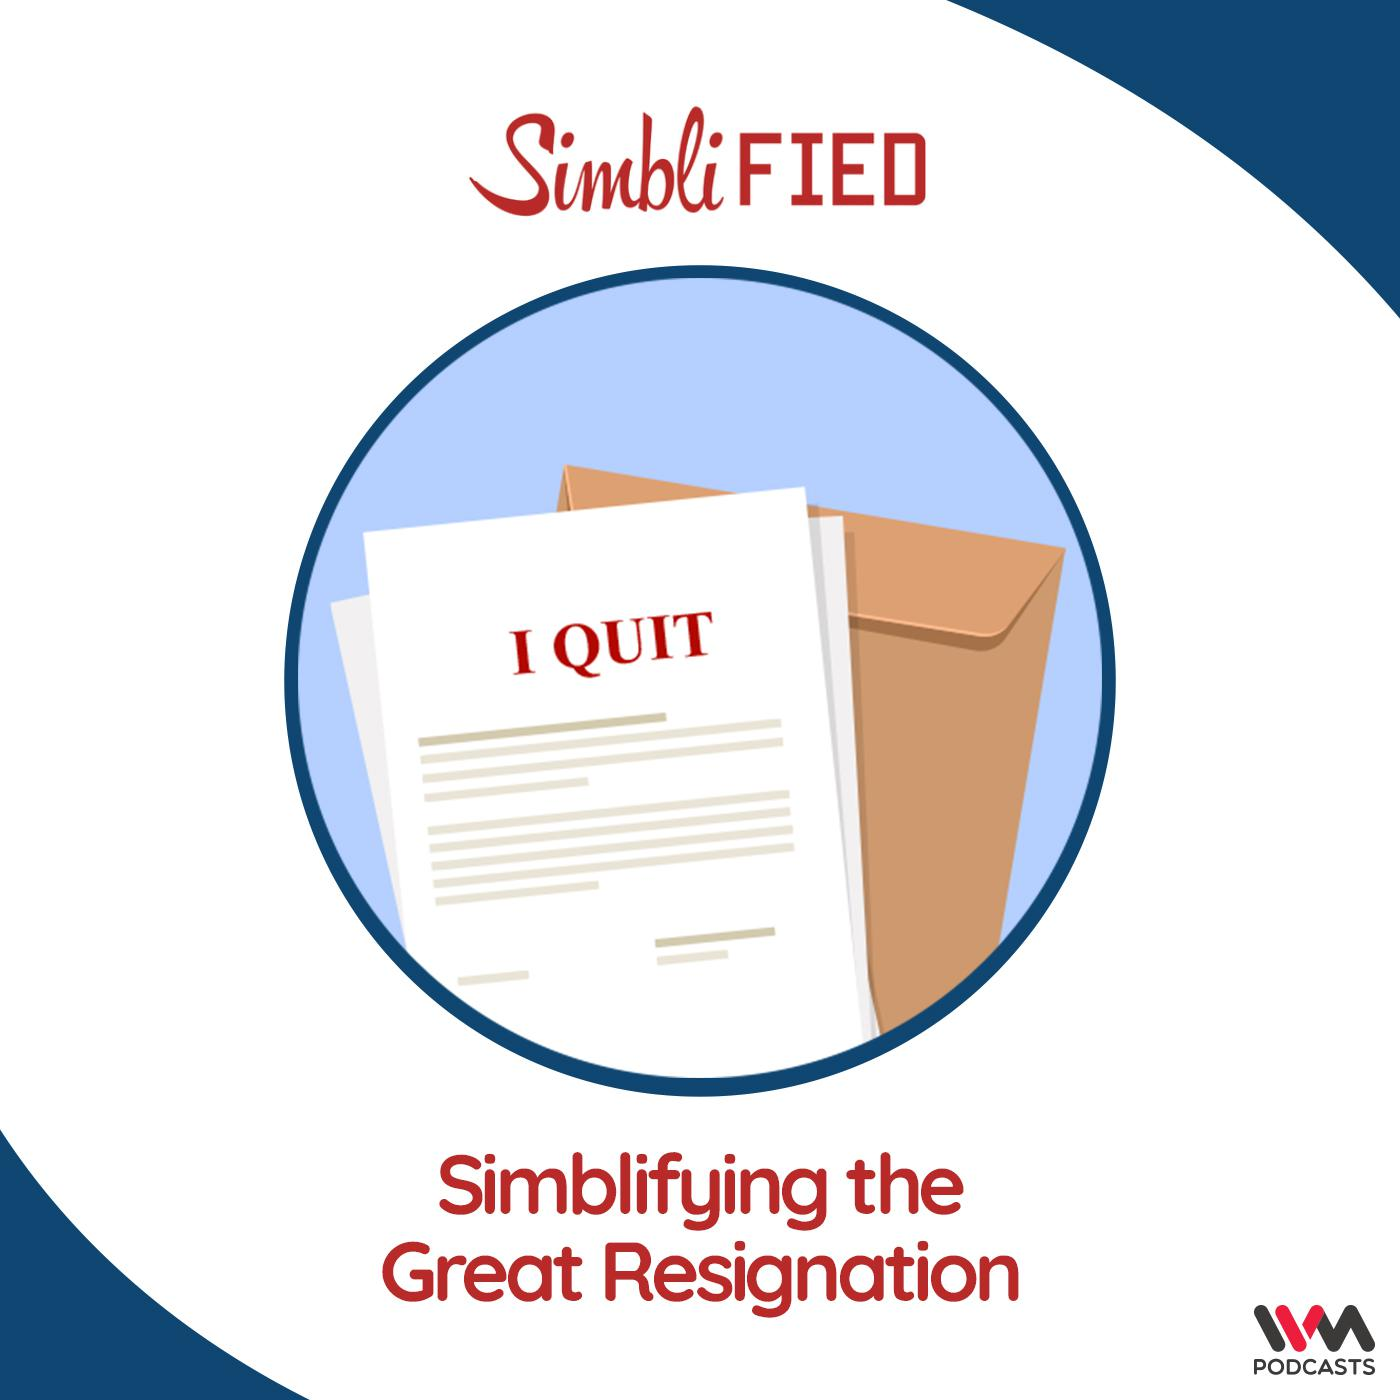 Simblifying the Great Resignation